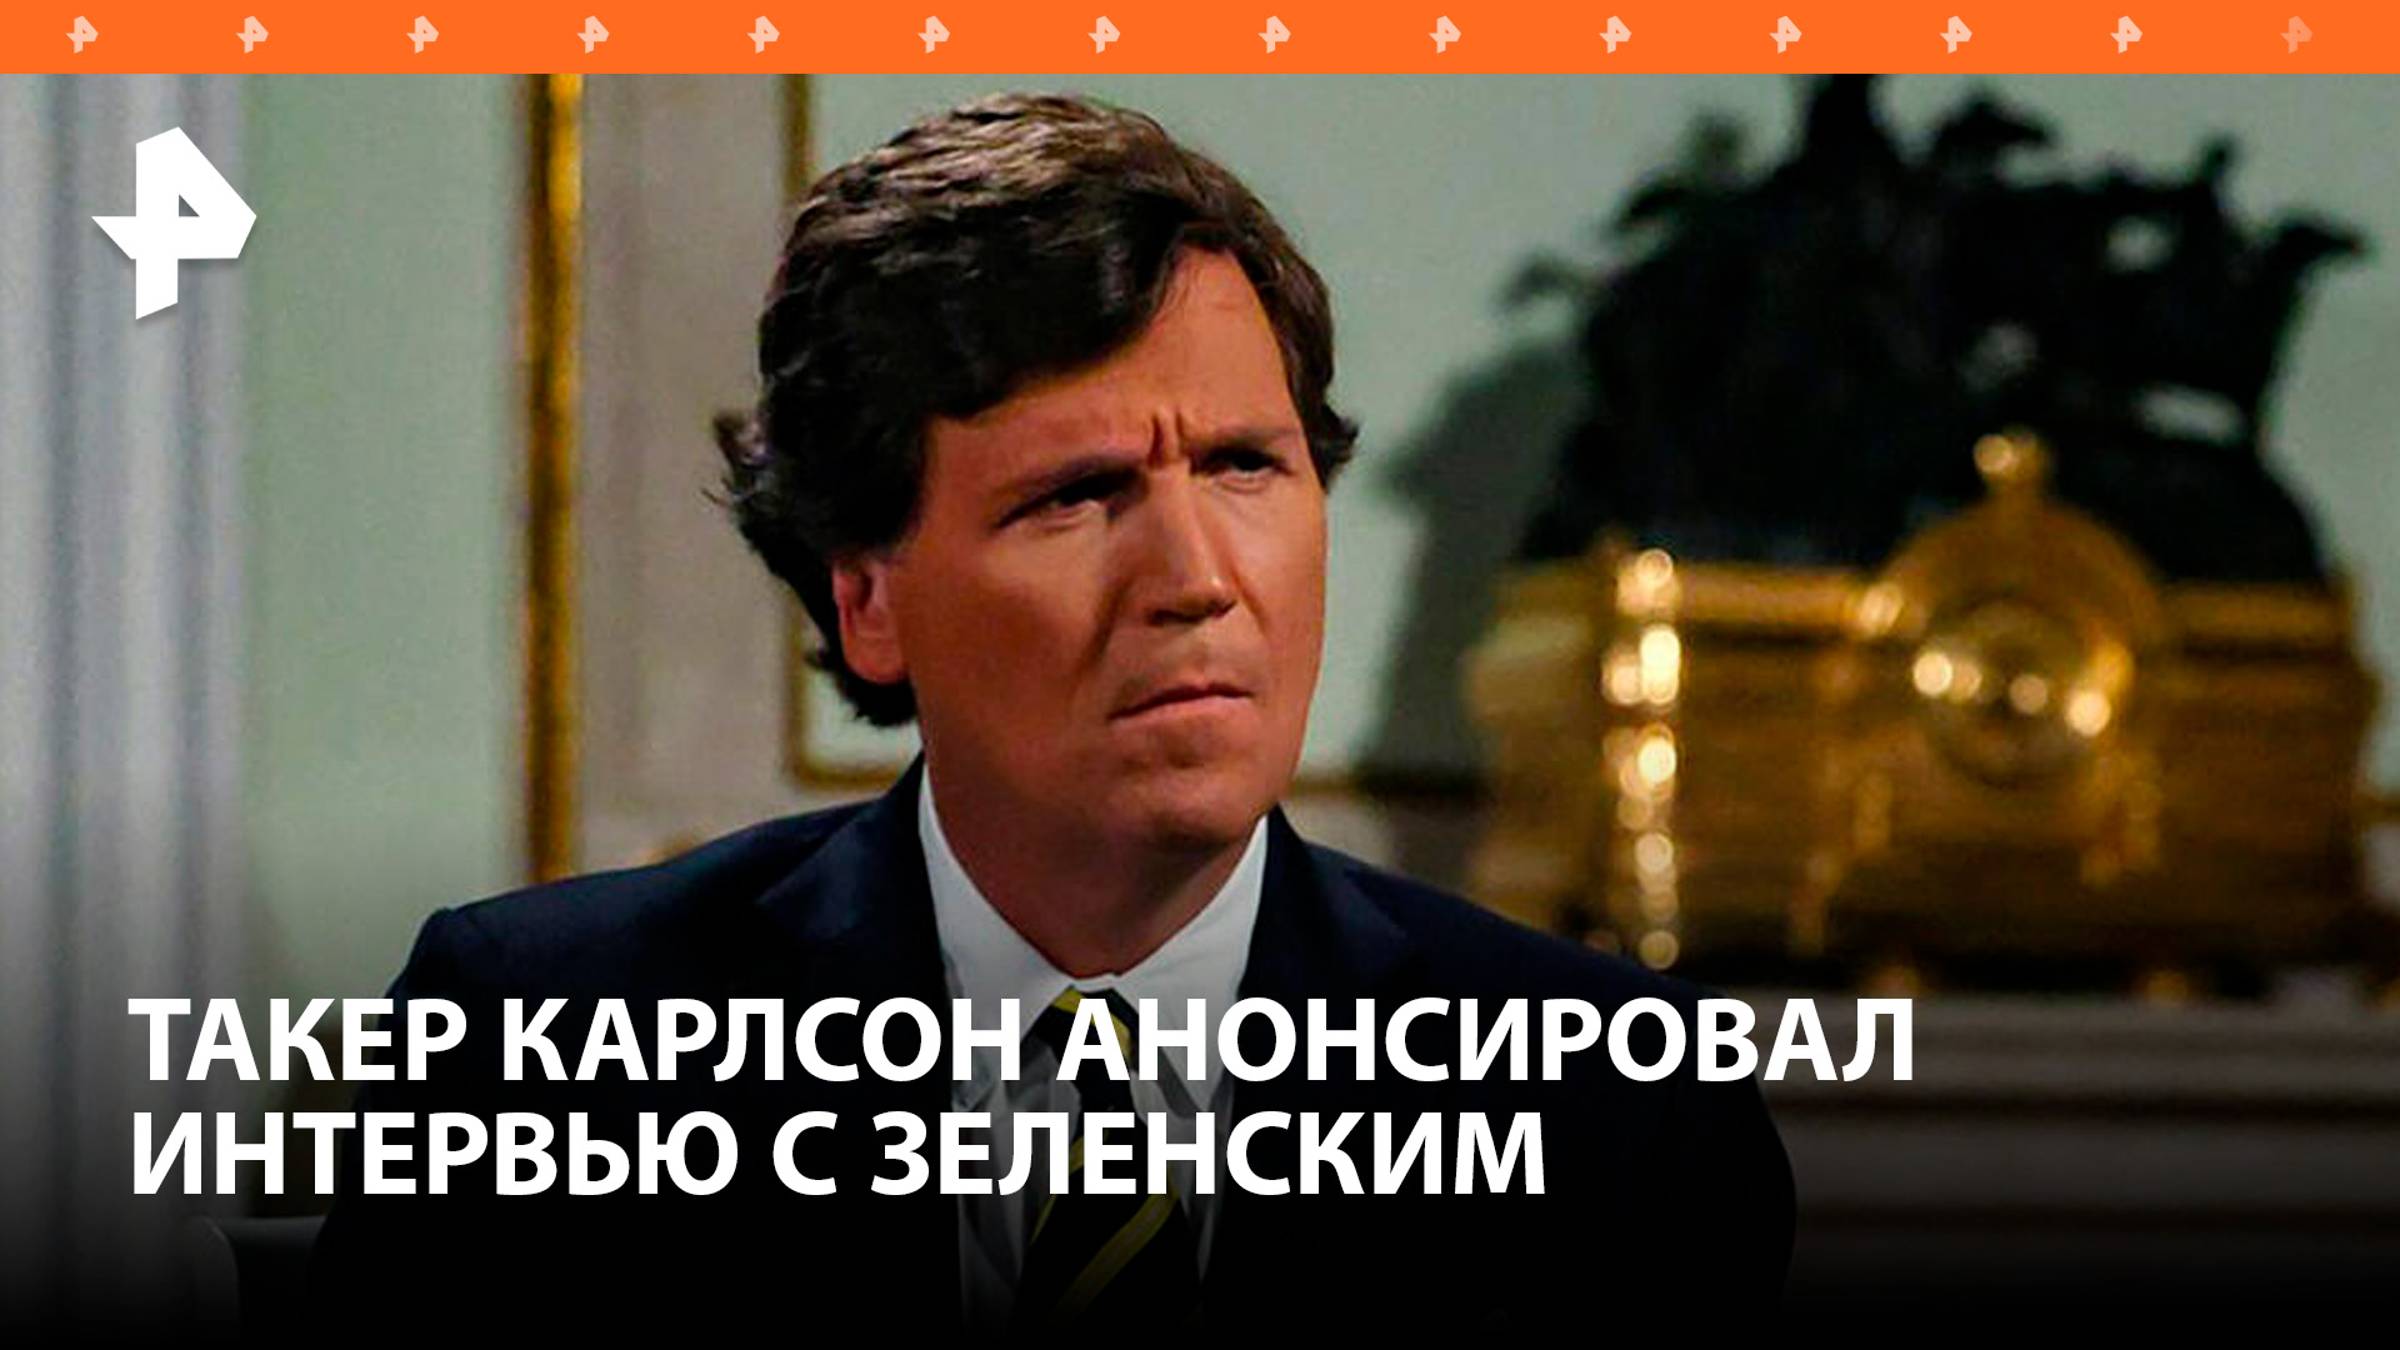 Карлсон анонсировал интервью с Зеленским / РЕН Новости